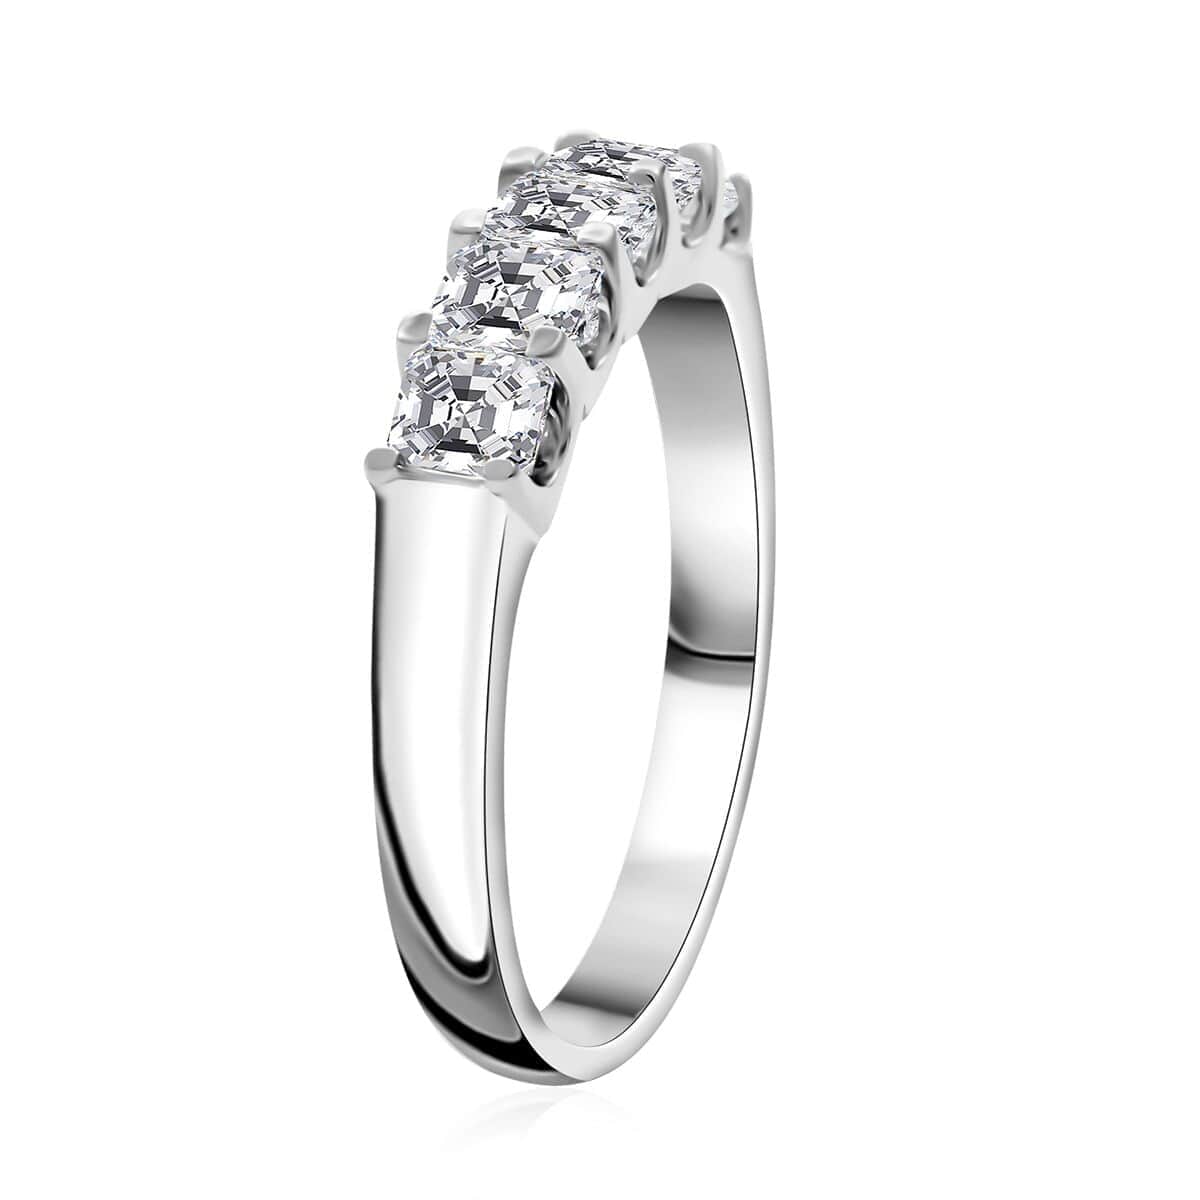 Modani 950 Platinum White Diamond E-F VS2 Ring (Size 7.0) 4.96 Grams 1.17 ctw (Del. in 10-12 Days) image number 3